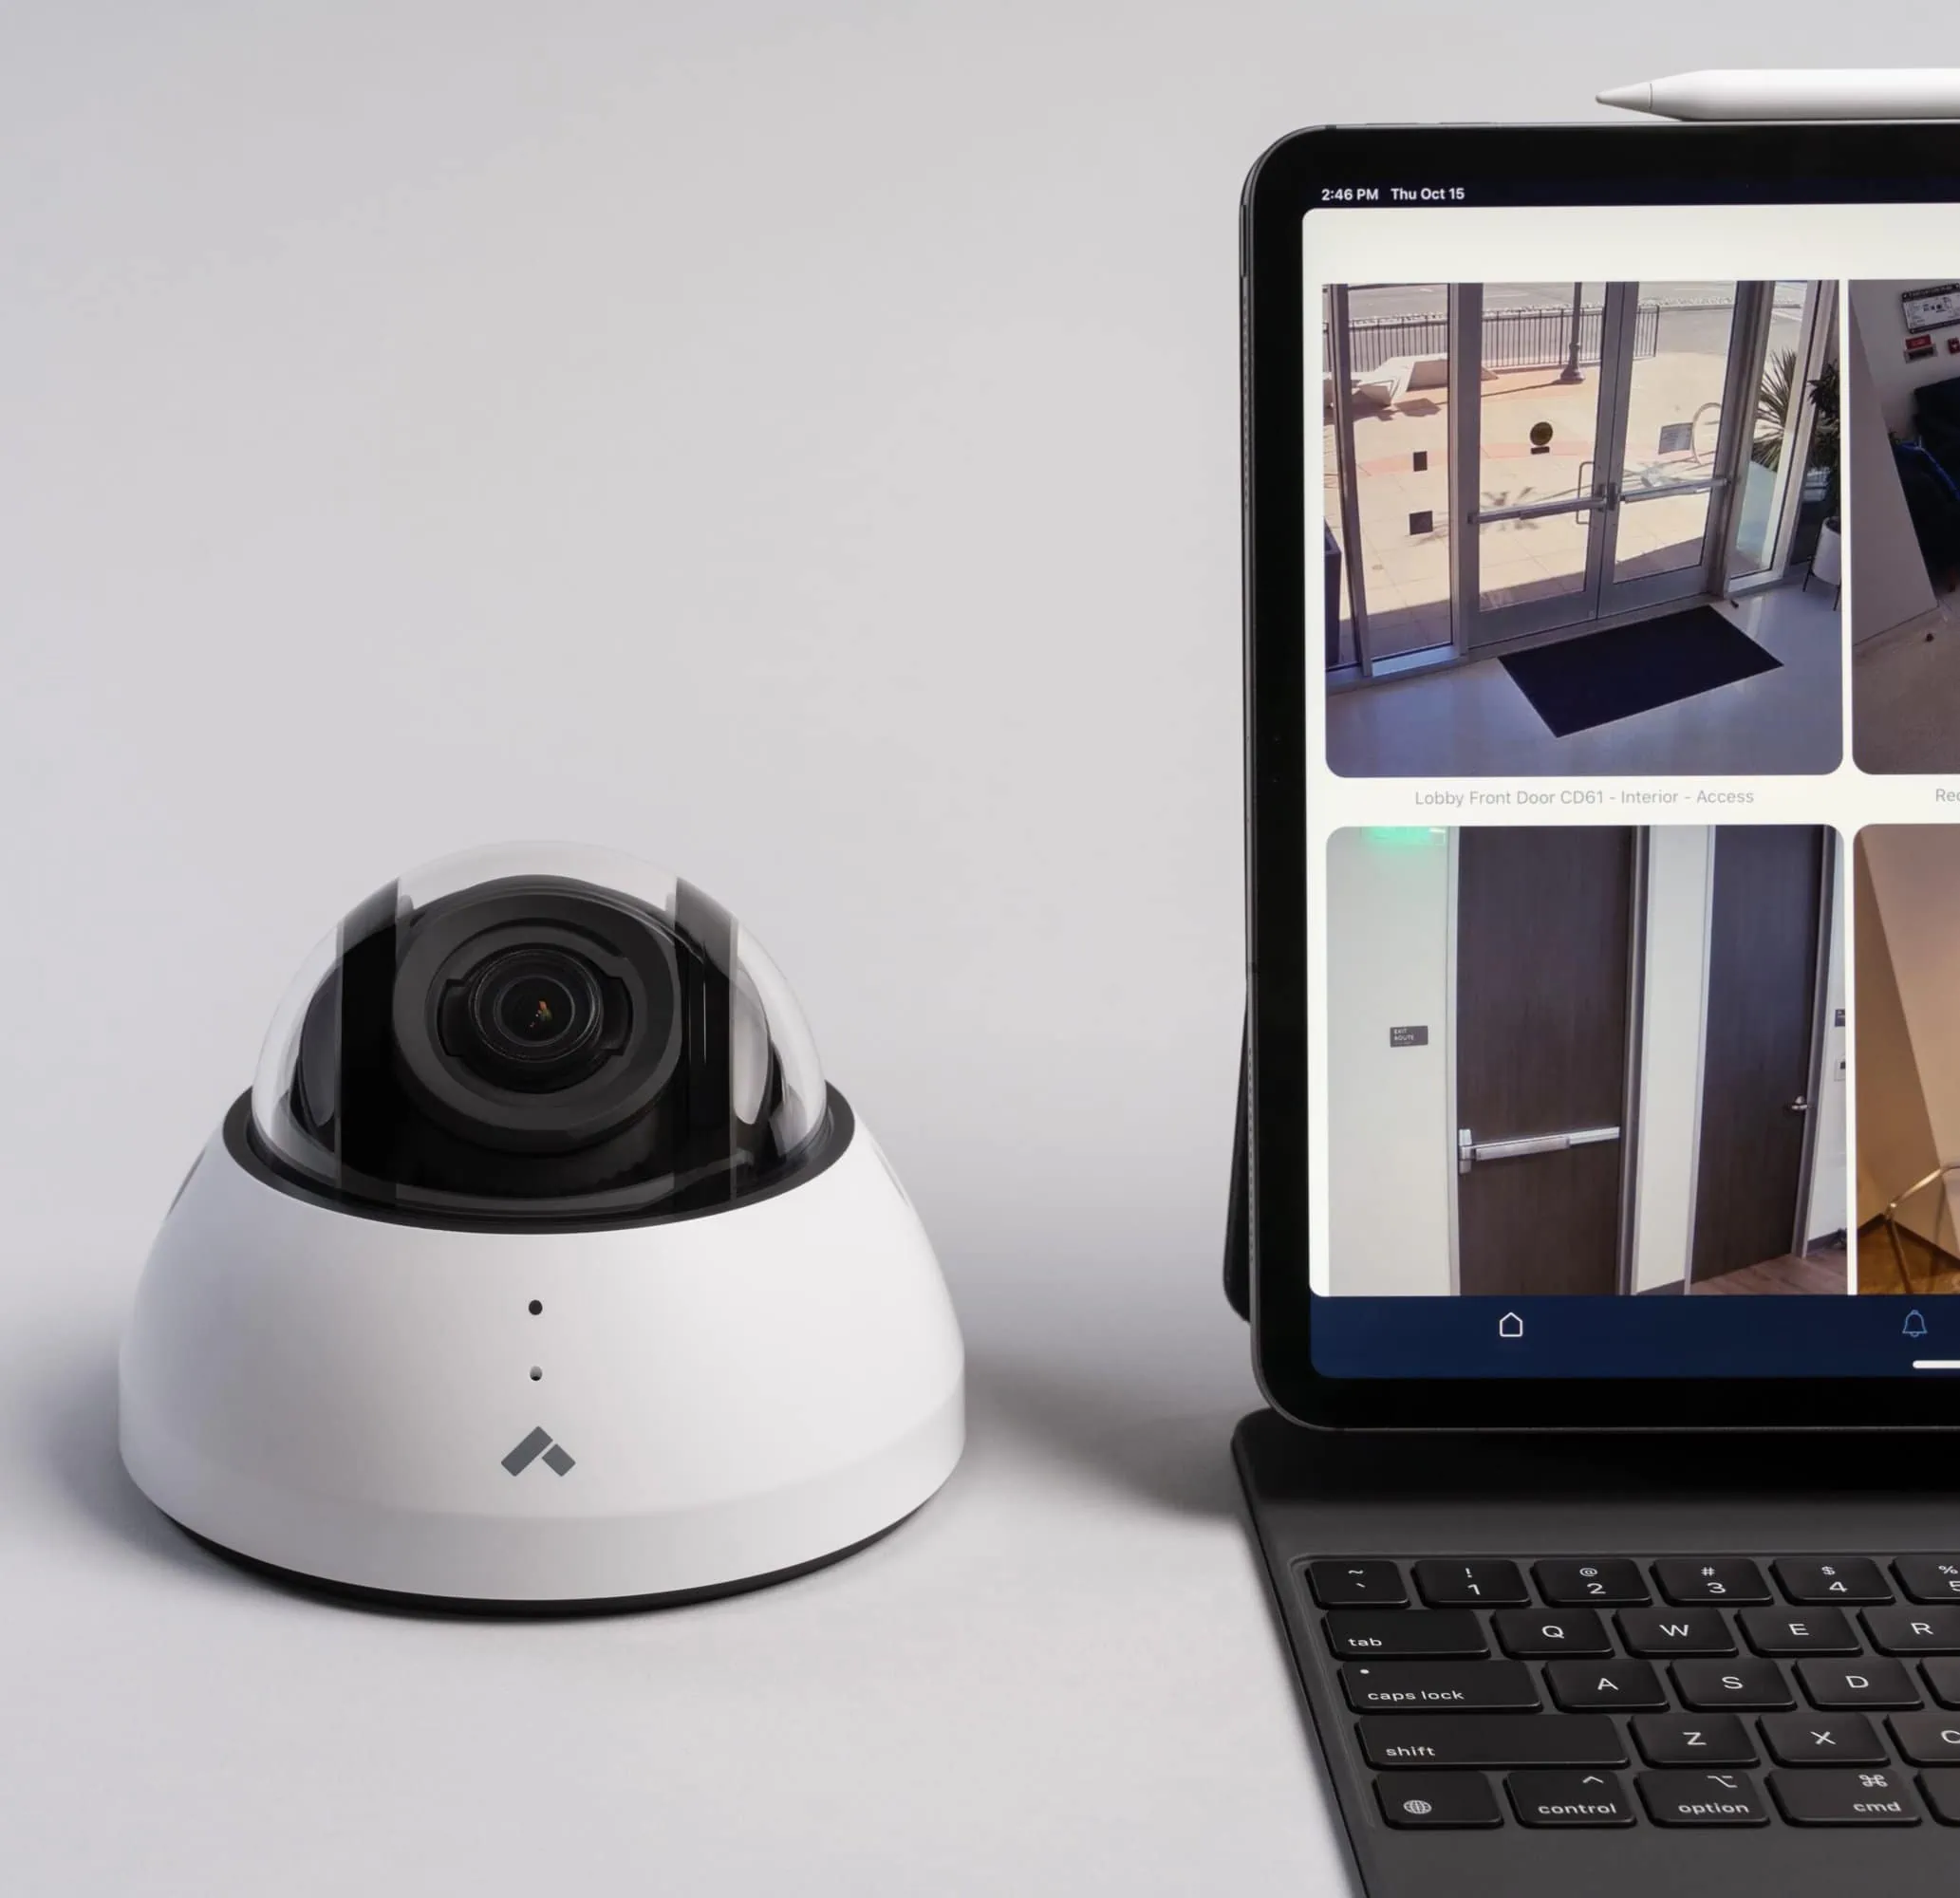 4K Dome surveillance camera next to laptop displaying footage